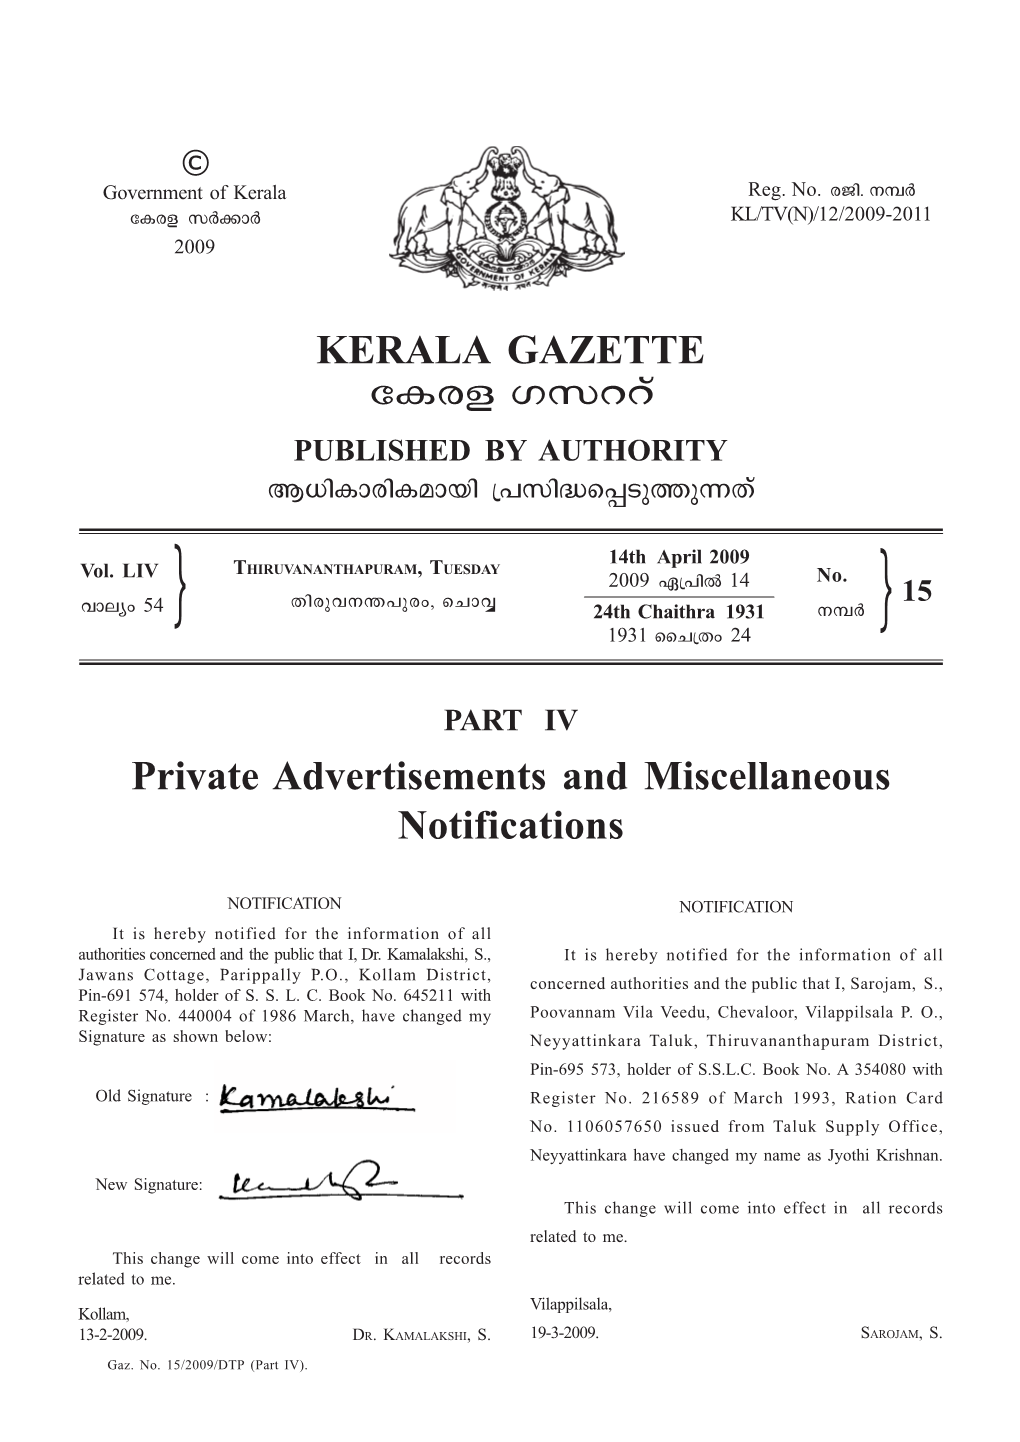 Private Advertisements and Miscellaneous Notifications KERALA GAZETTE Ticf Kkddv